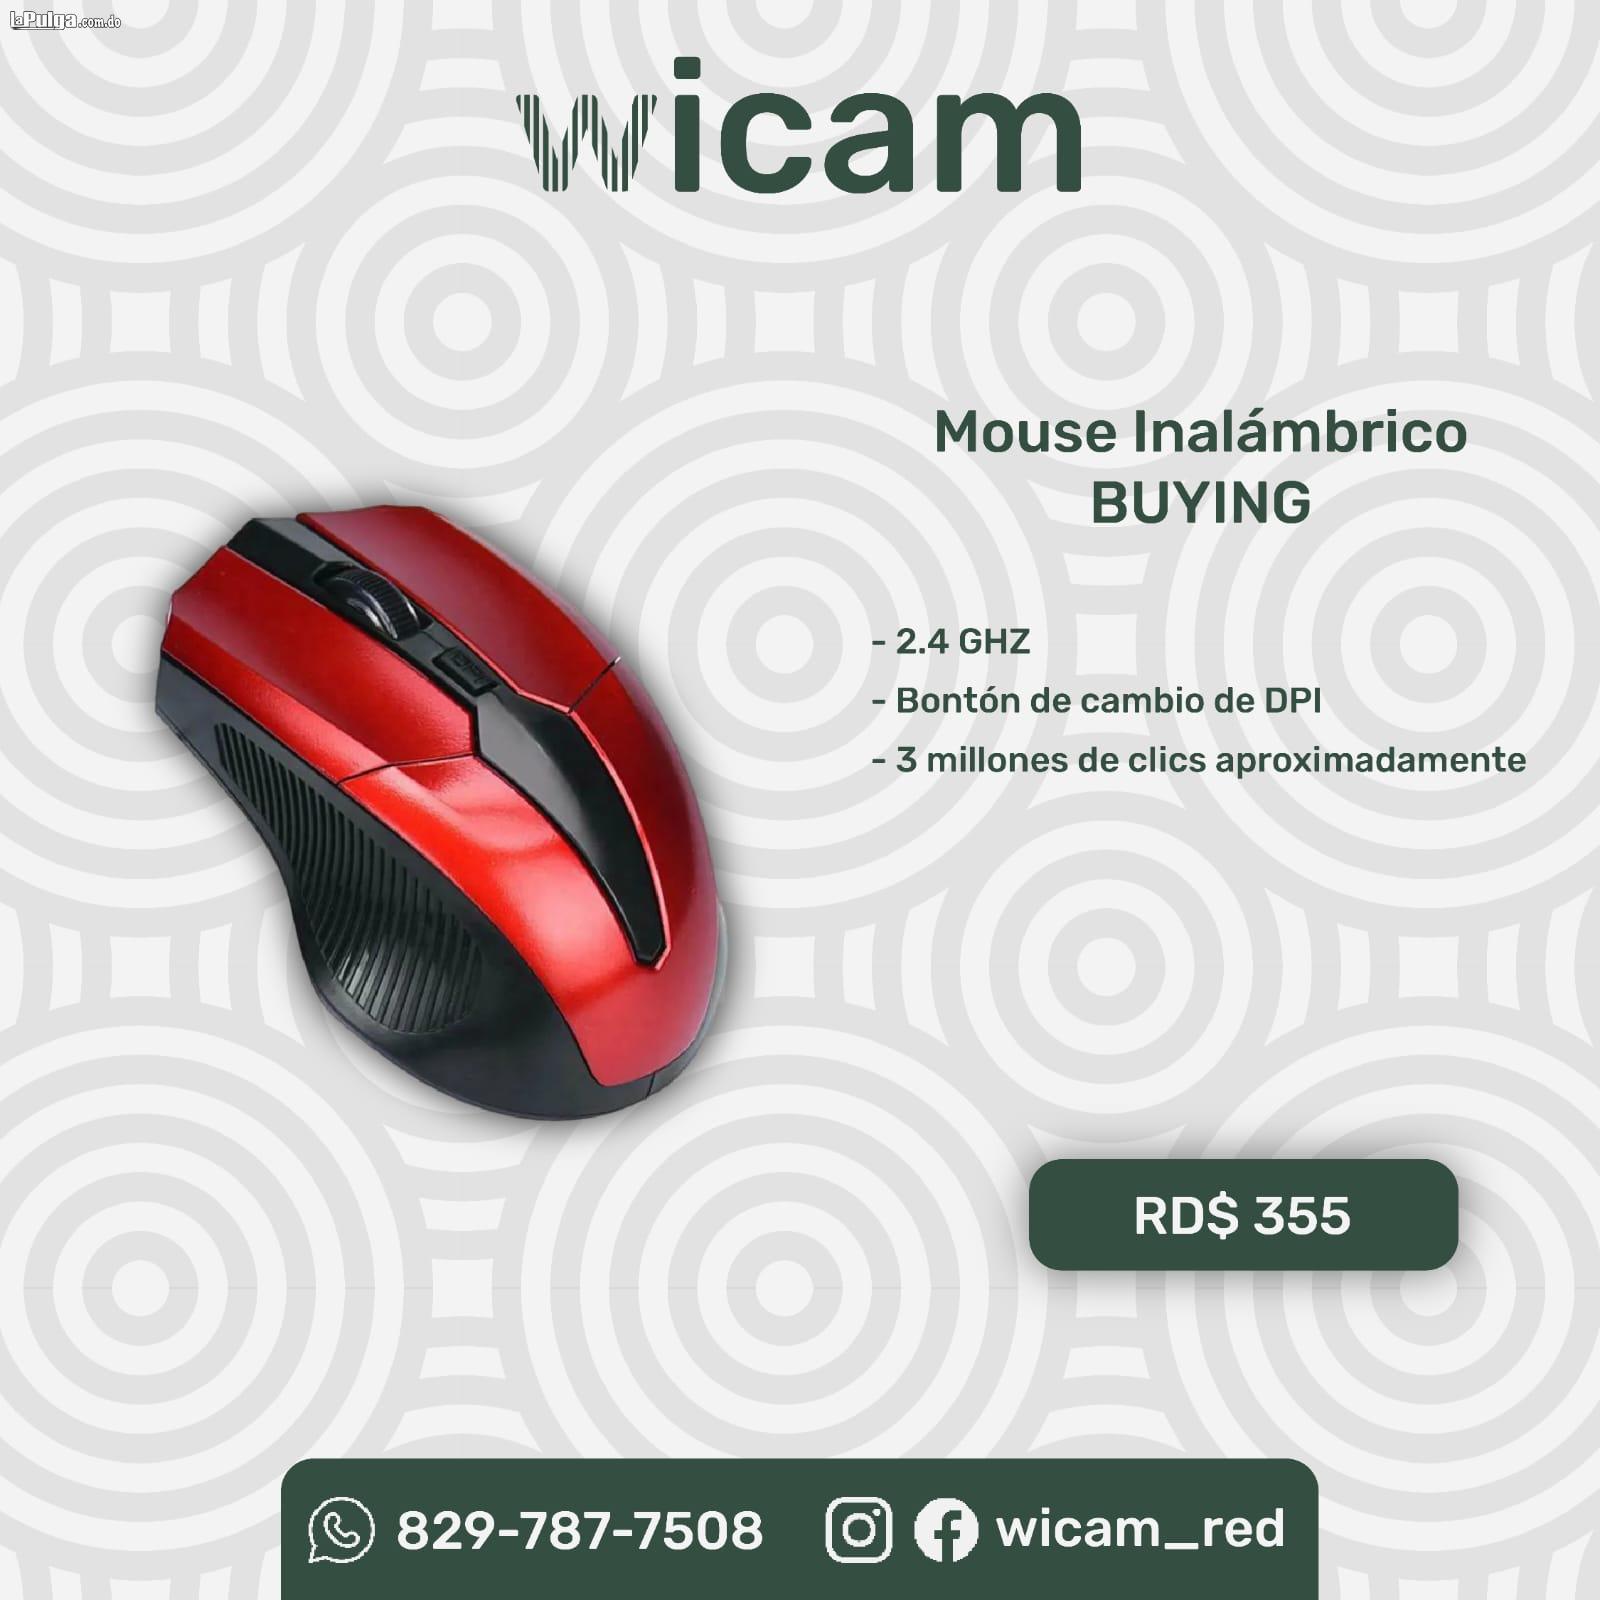 Mouse inalambrico buying  Foto 7151752-1.jpg